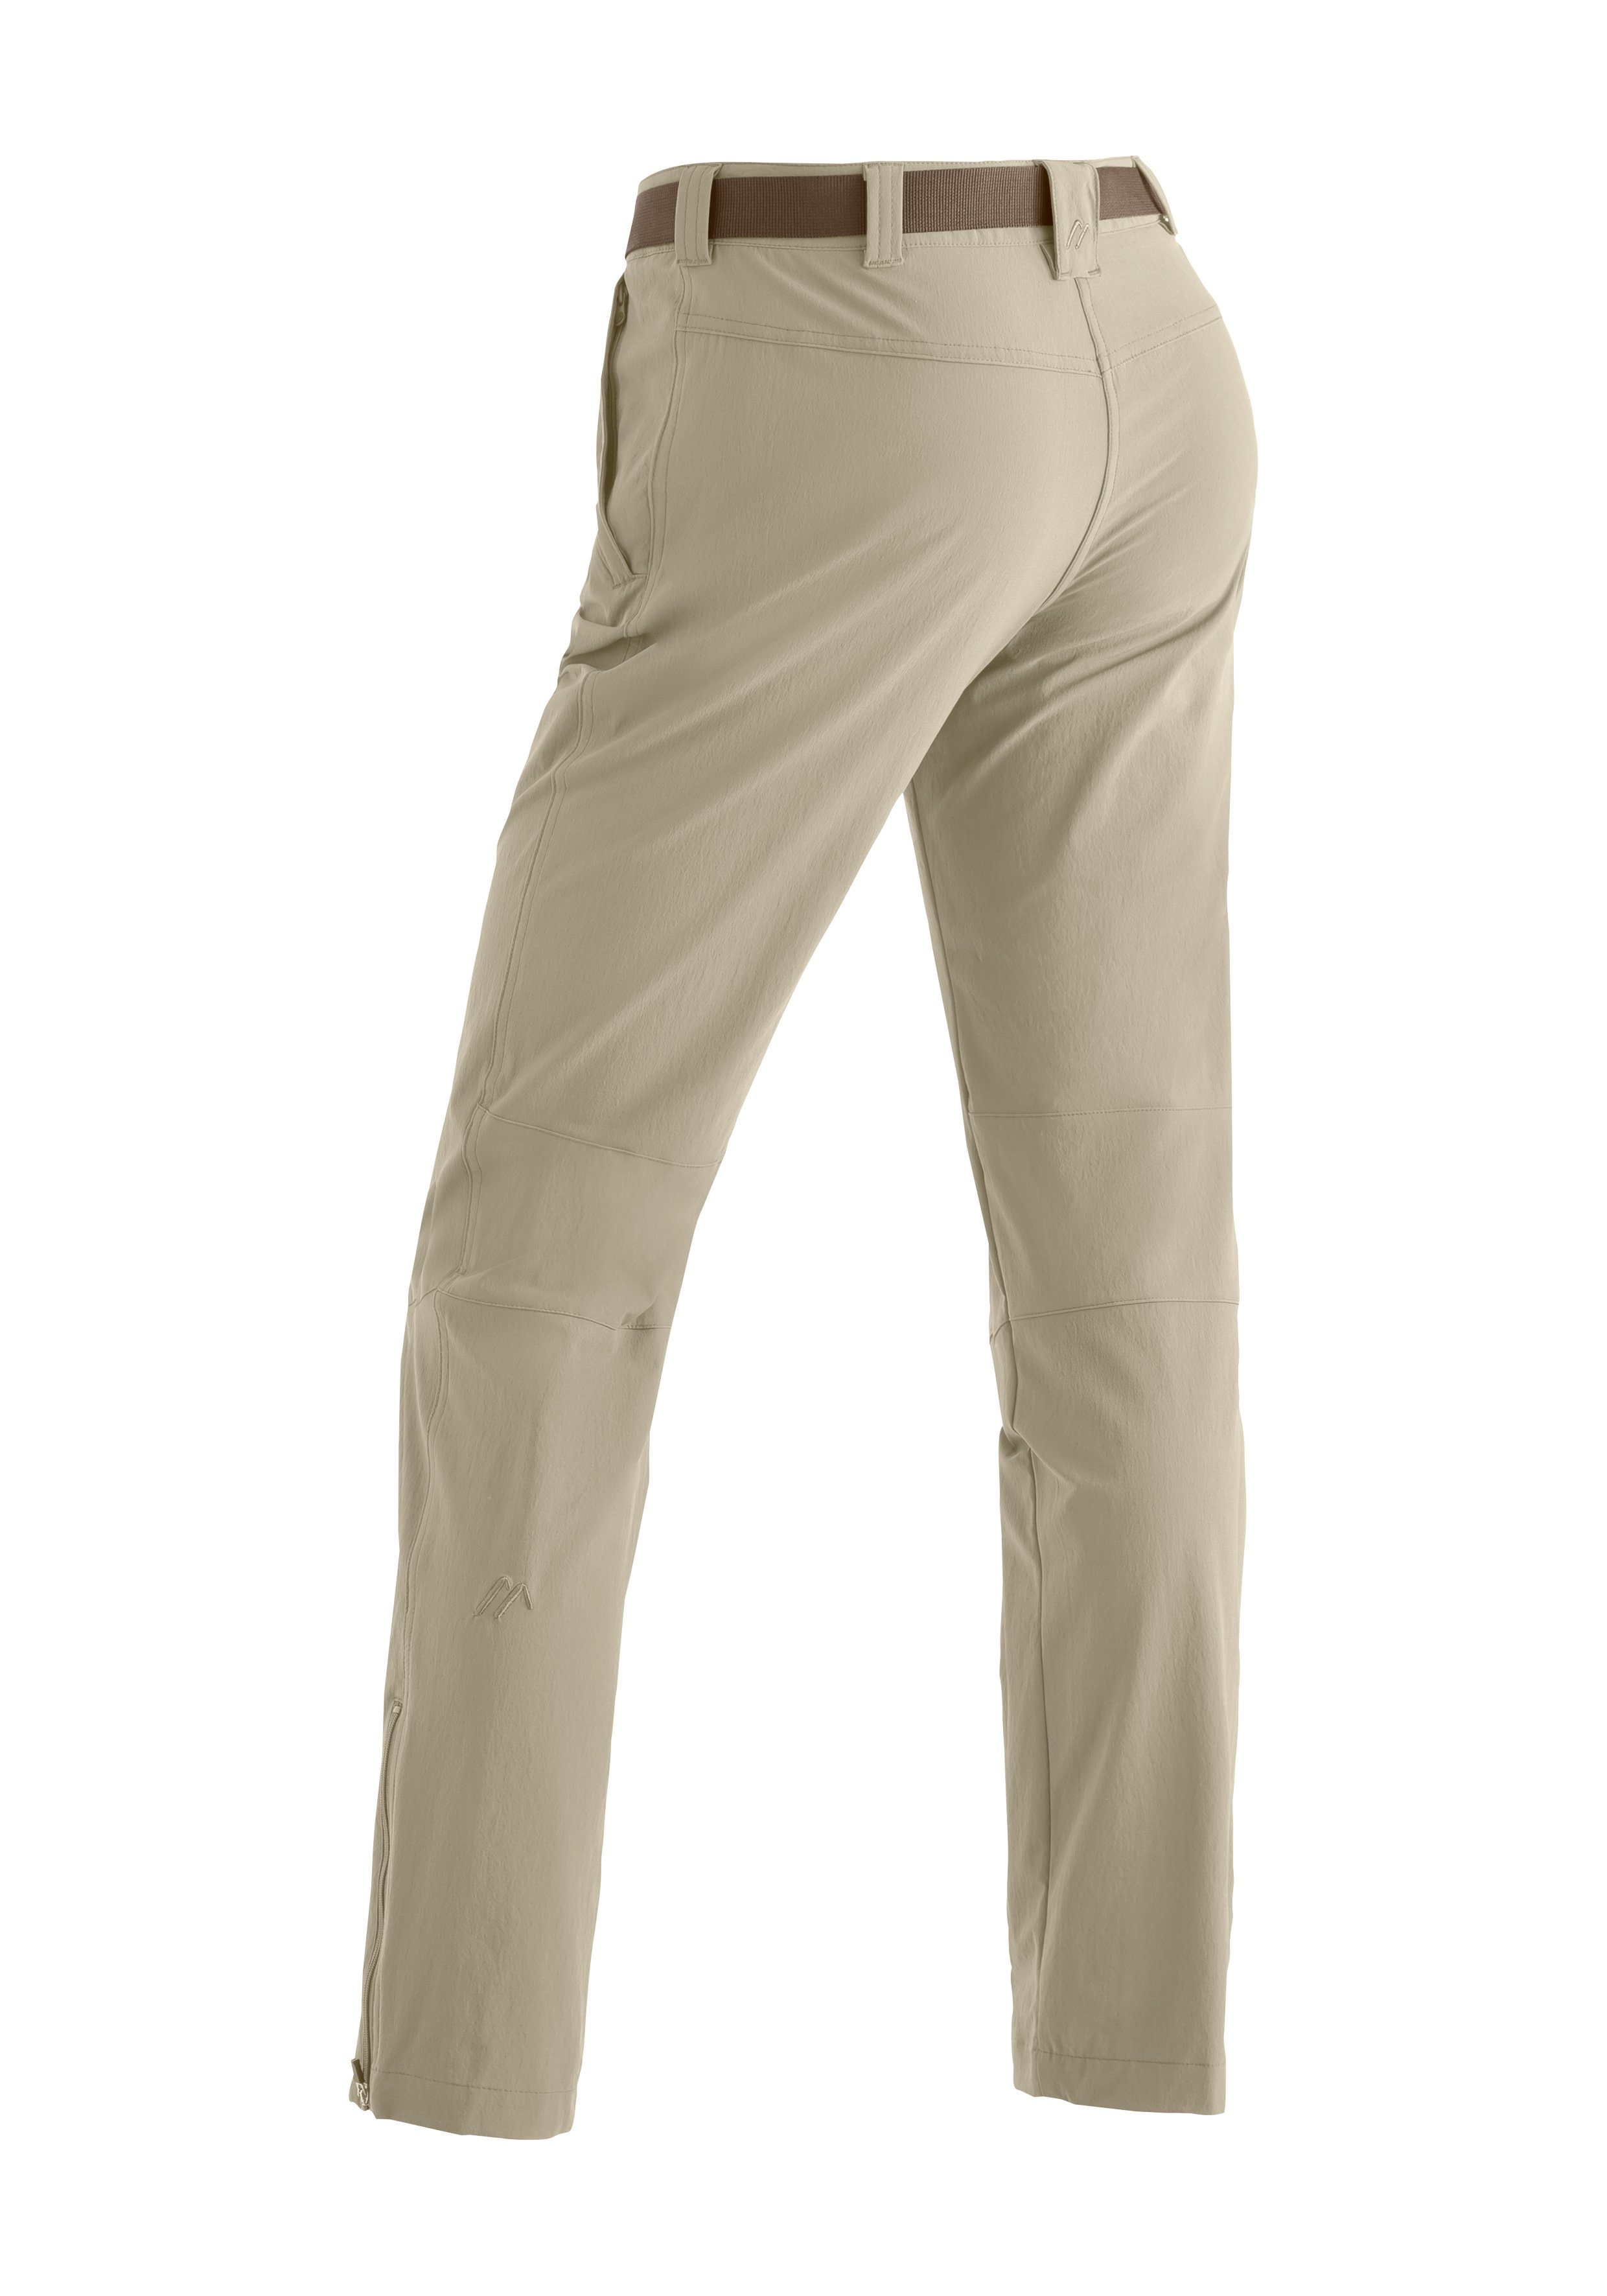 Material Maier Damen Inara Sports Outdoor-Hose Funktionshose Wanderhose, hellbraun aus slim elastischem